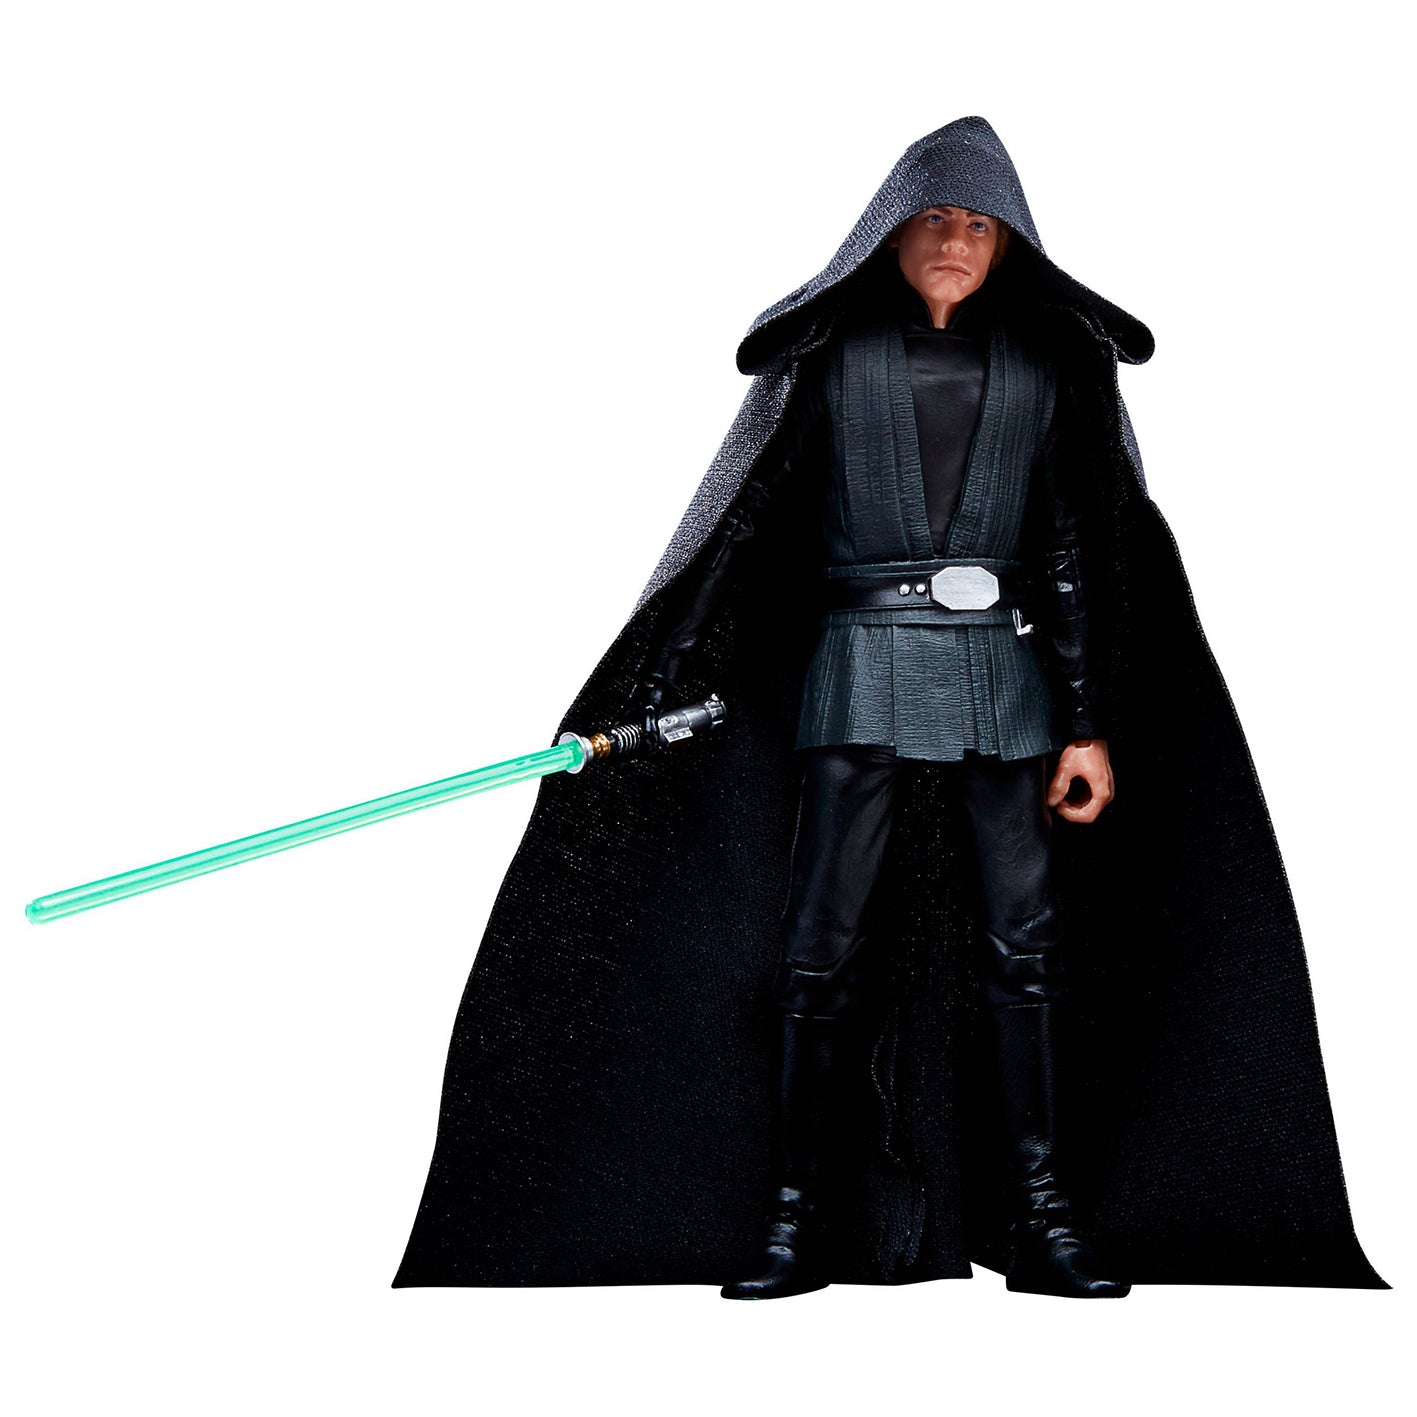 Luke Skywalker (Imperial Light Cruiser), Star Wars: The Black Series 6 pulgadas